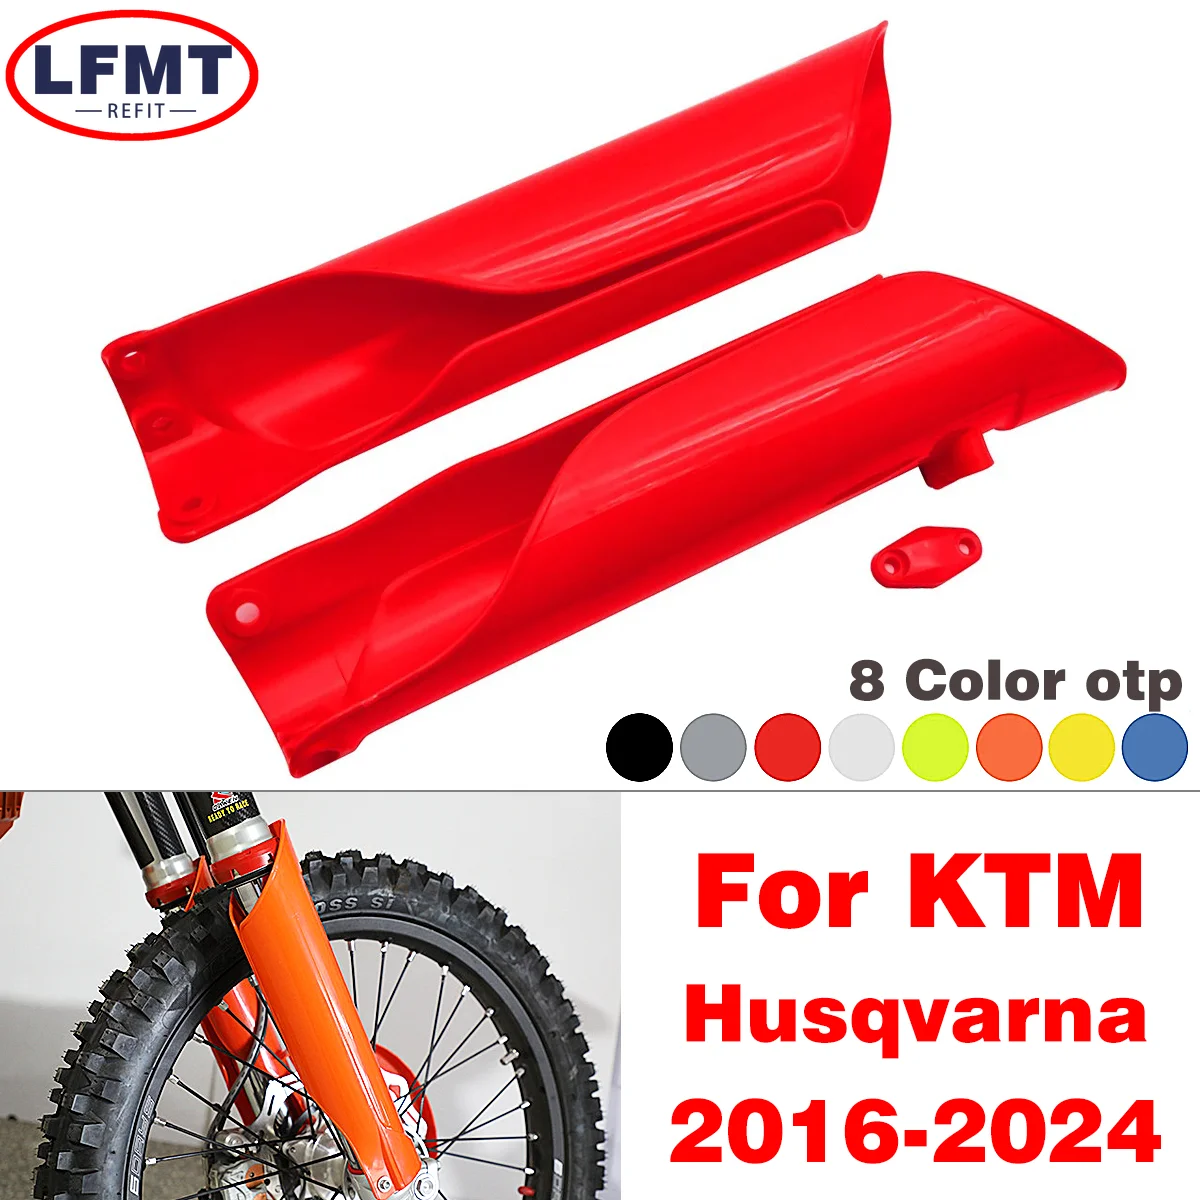 

Защитная крышка для вилки мотоцикла, амортизатор для KTM SX EXC XC XCW XCF для Husqvarna TE TC FC 125-530, защита для кроссового велосипеда